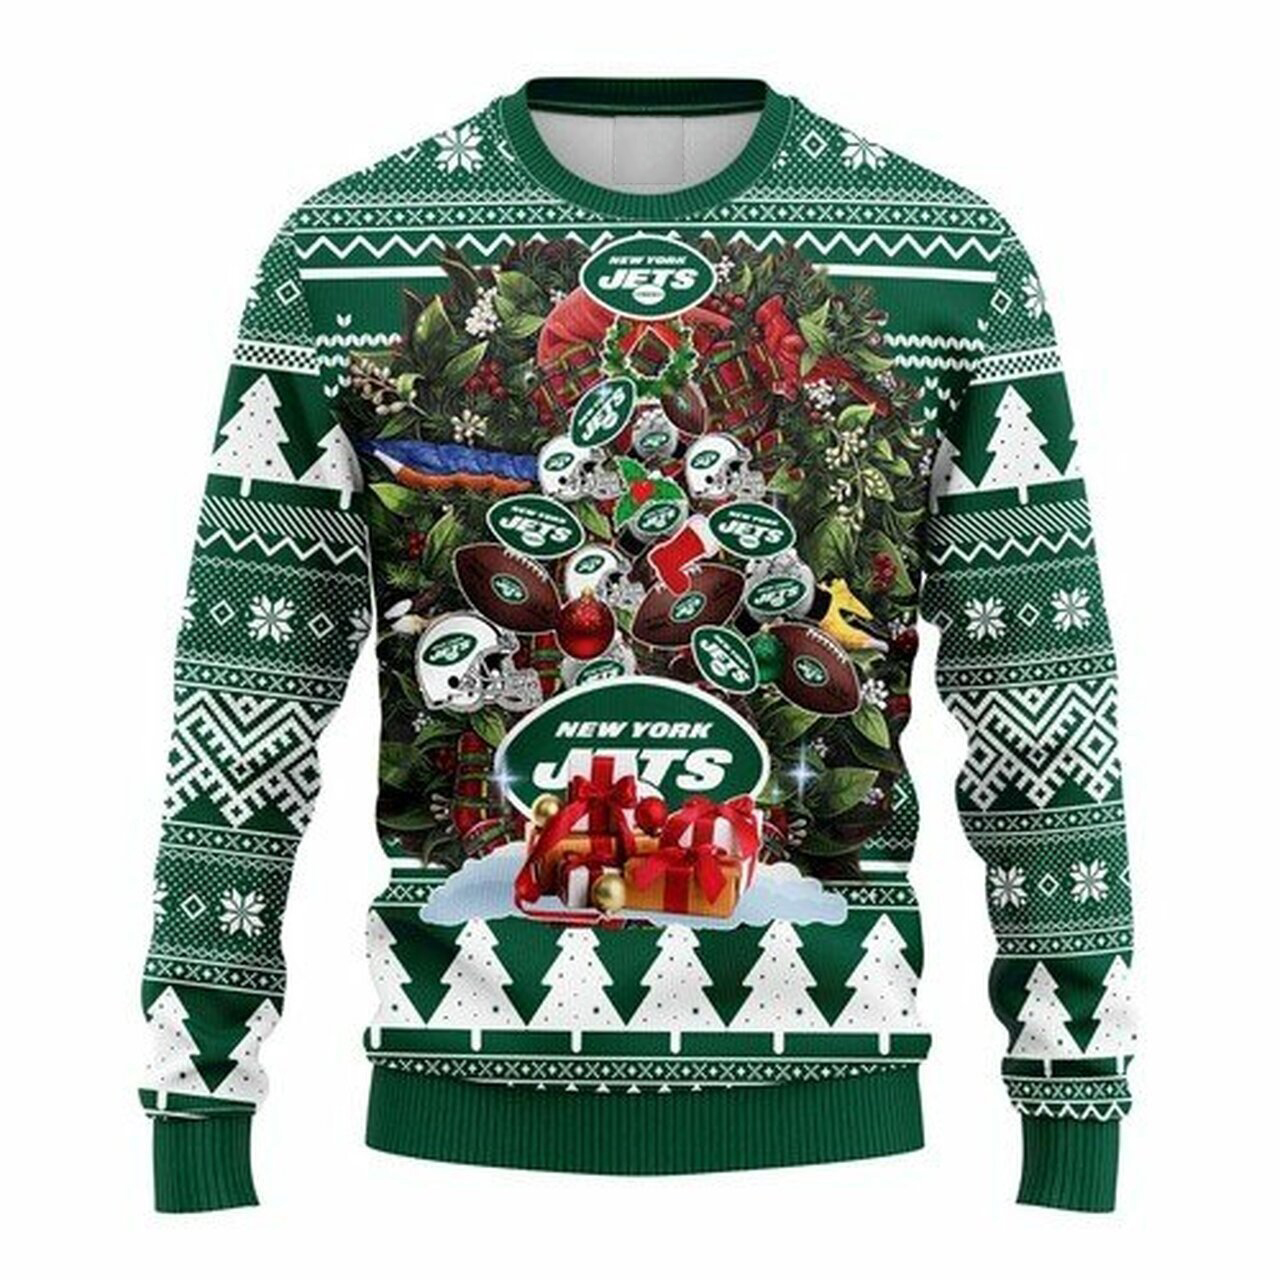 [ HOT ] NFL New York Jets christmas tree ugly sweater – Saleoff 040122